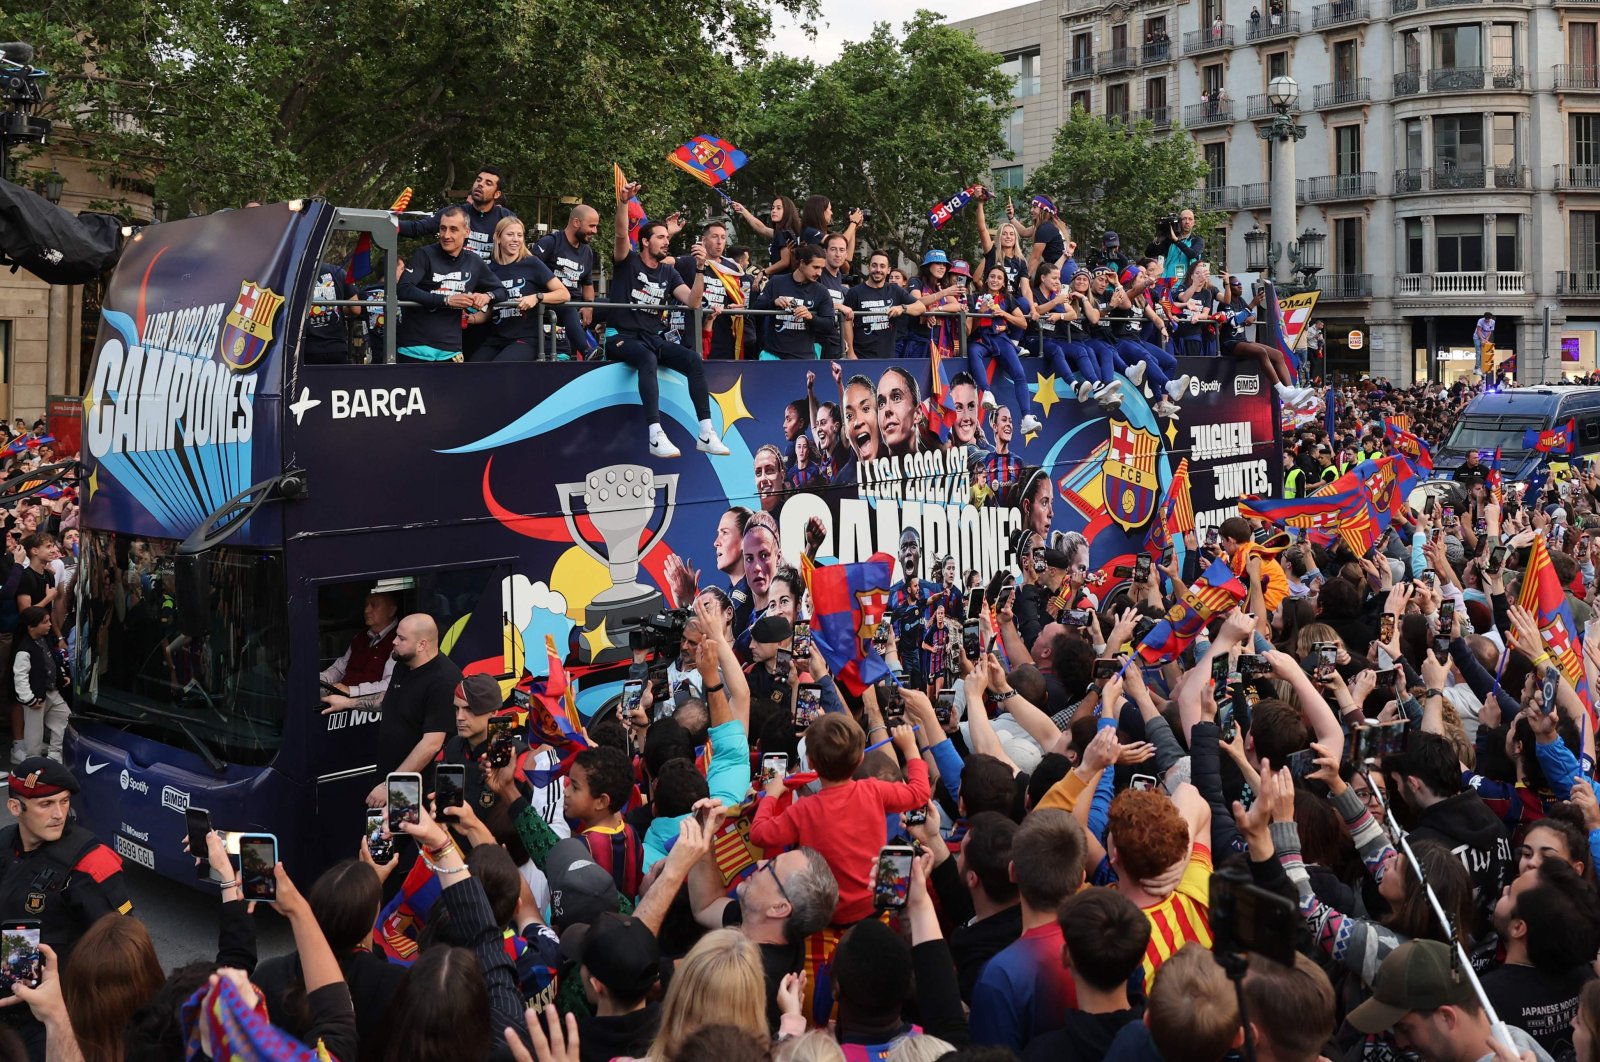 Kemenangan spektakuler La Liga Barca memicu parade penggemar-pemain yang menggembirakan